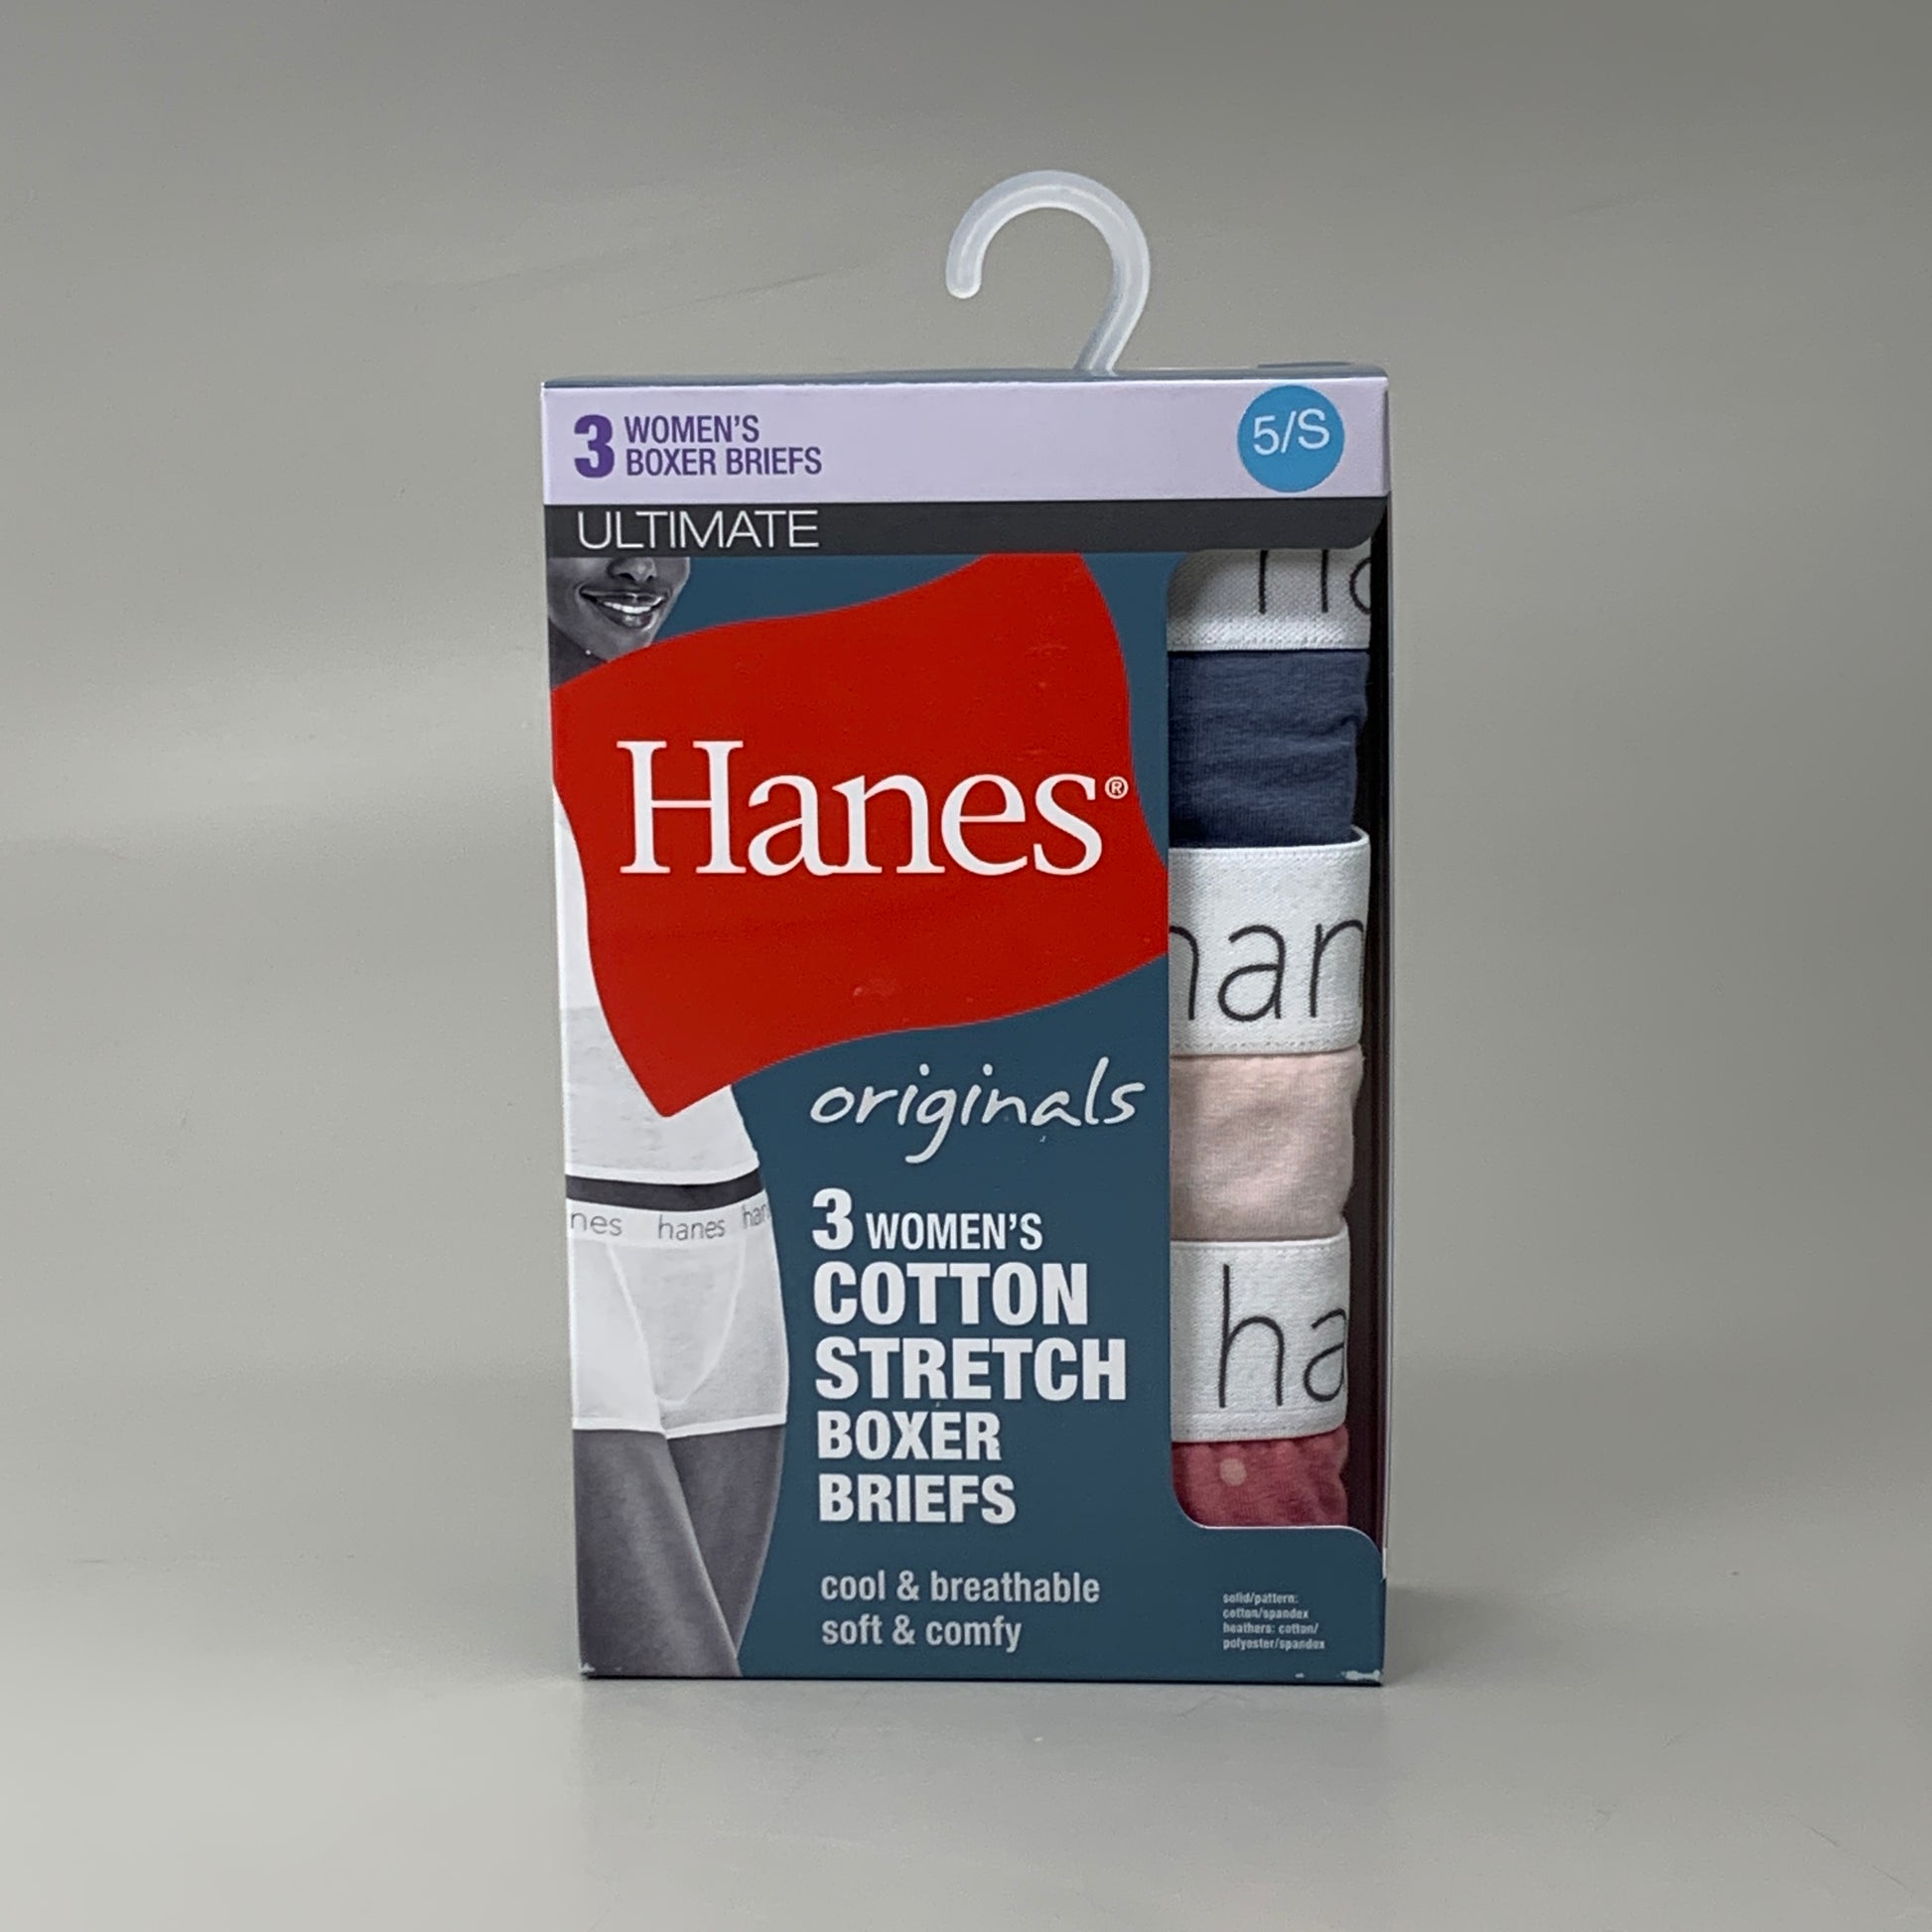 Hanes Women's Panties Pack, Soft Cotton Nigeria